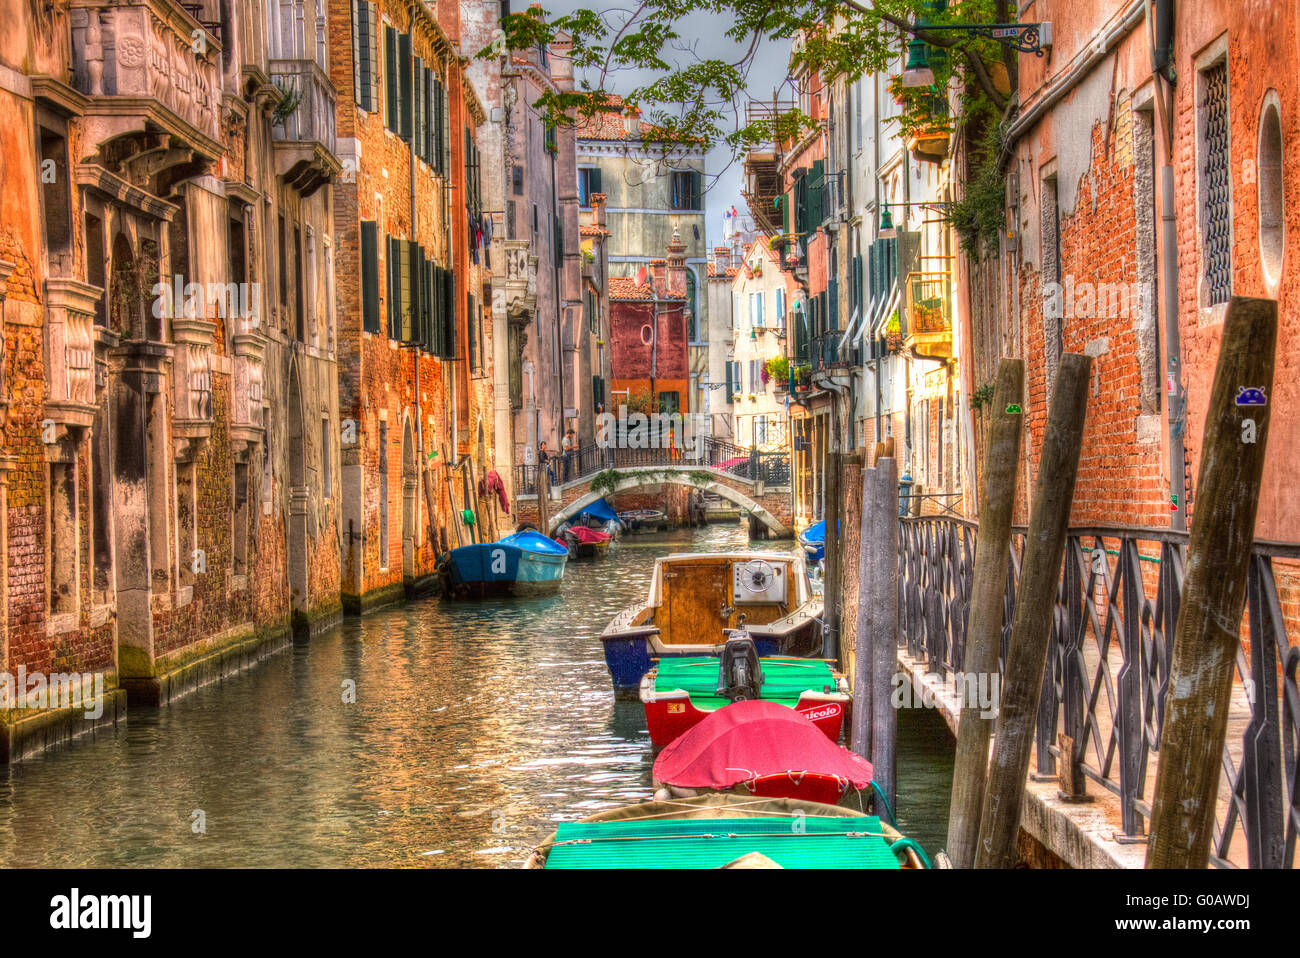 Little Waterway in Venice, Italy Stock Photo